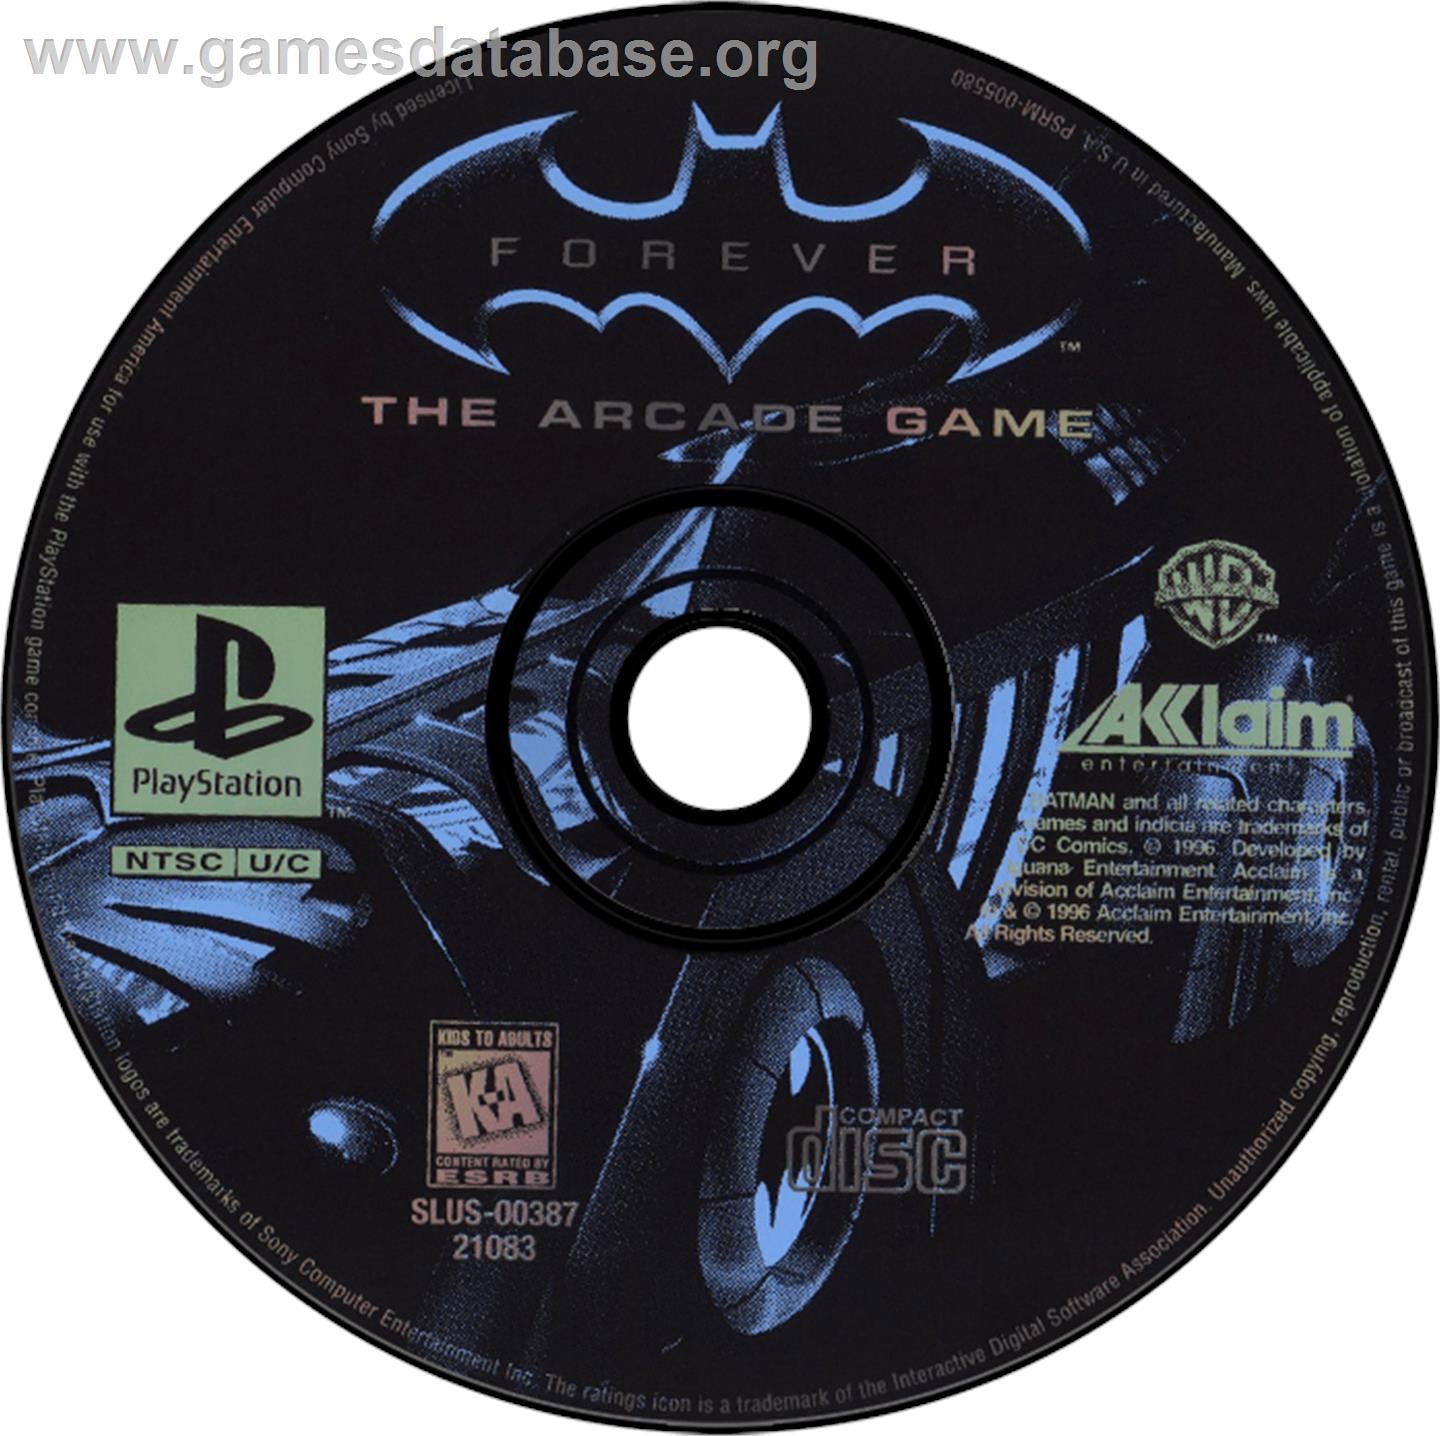 Batman Forever: The Arcade Game - Sony Playstation - Artwork - Disc